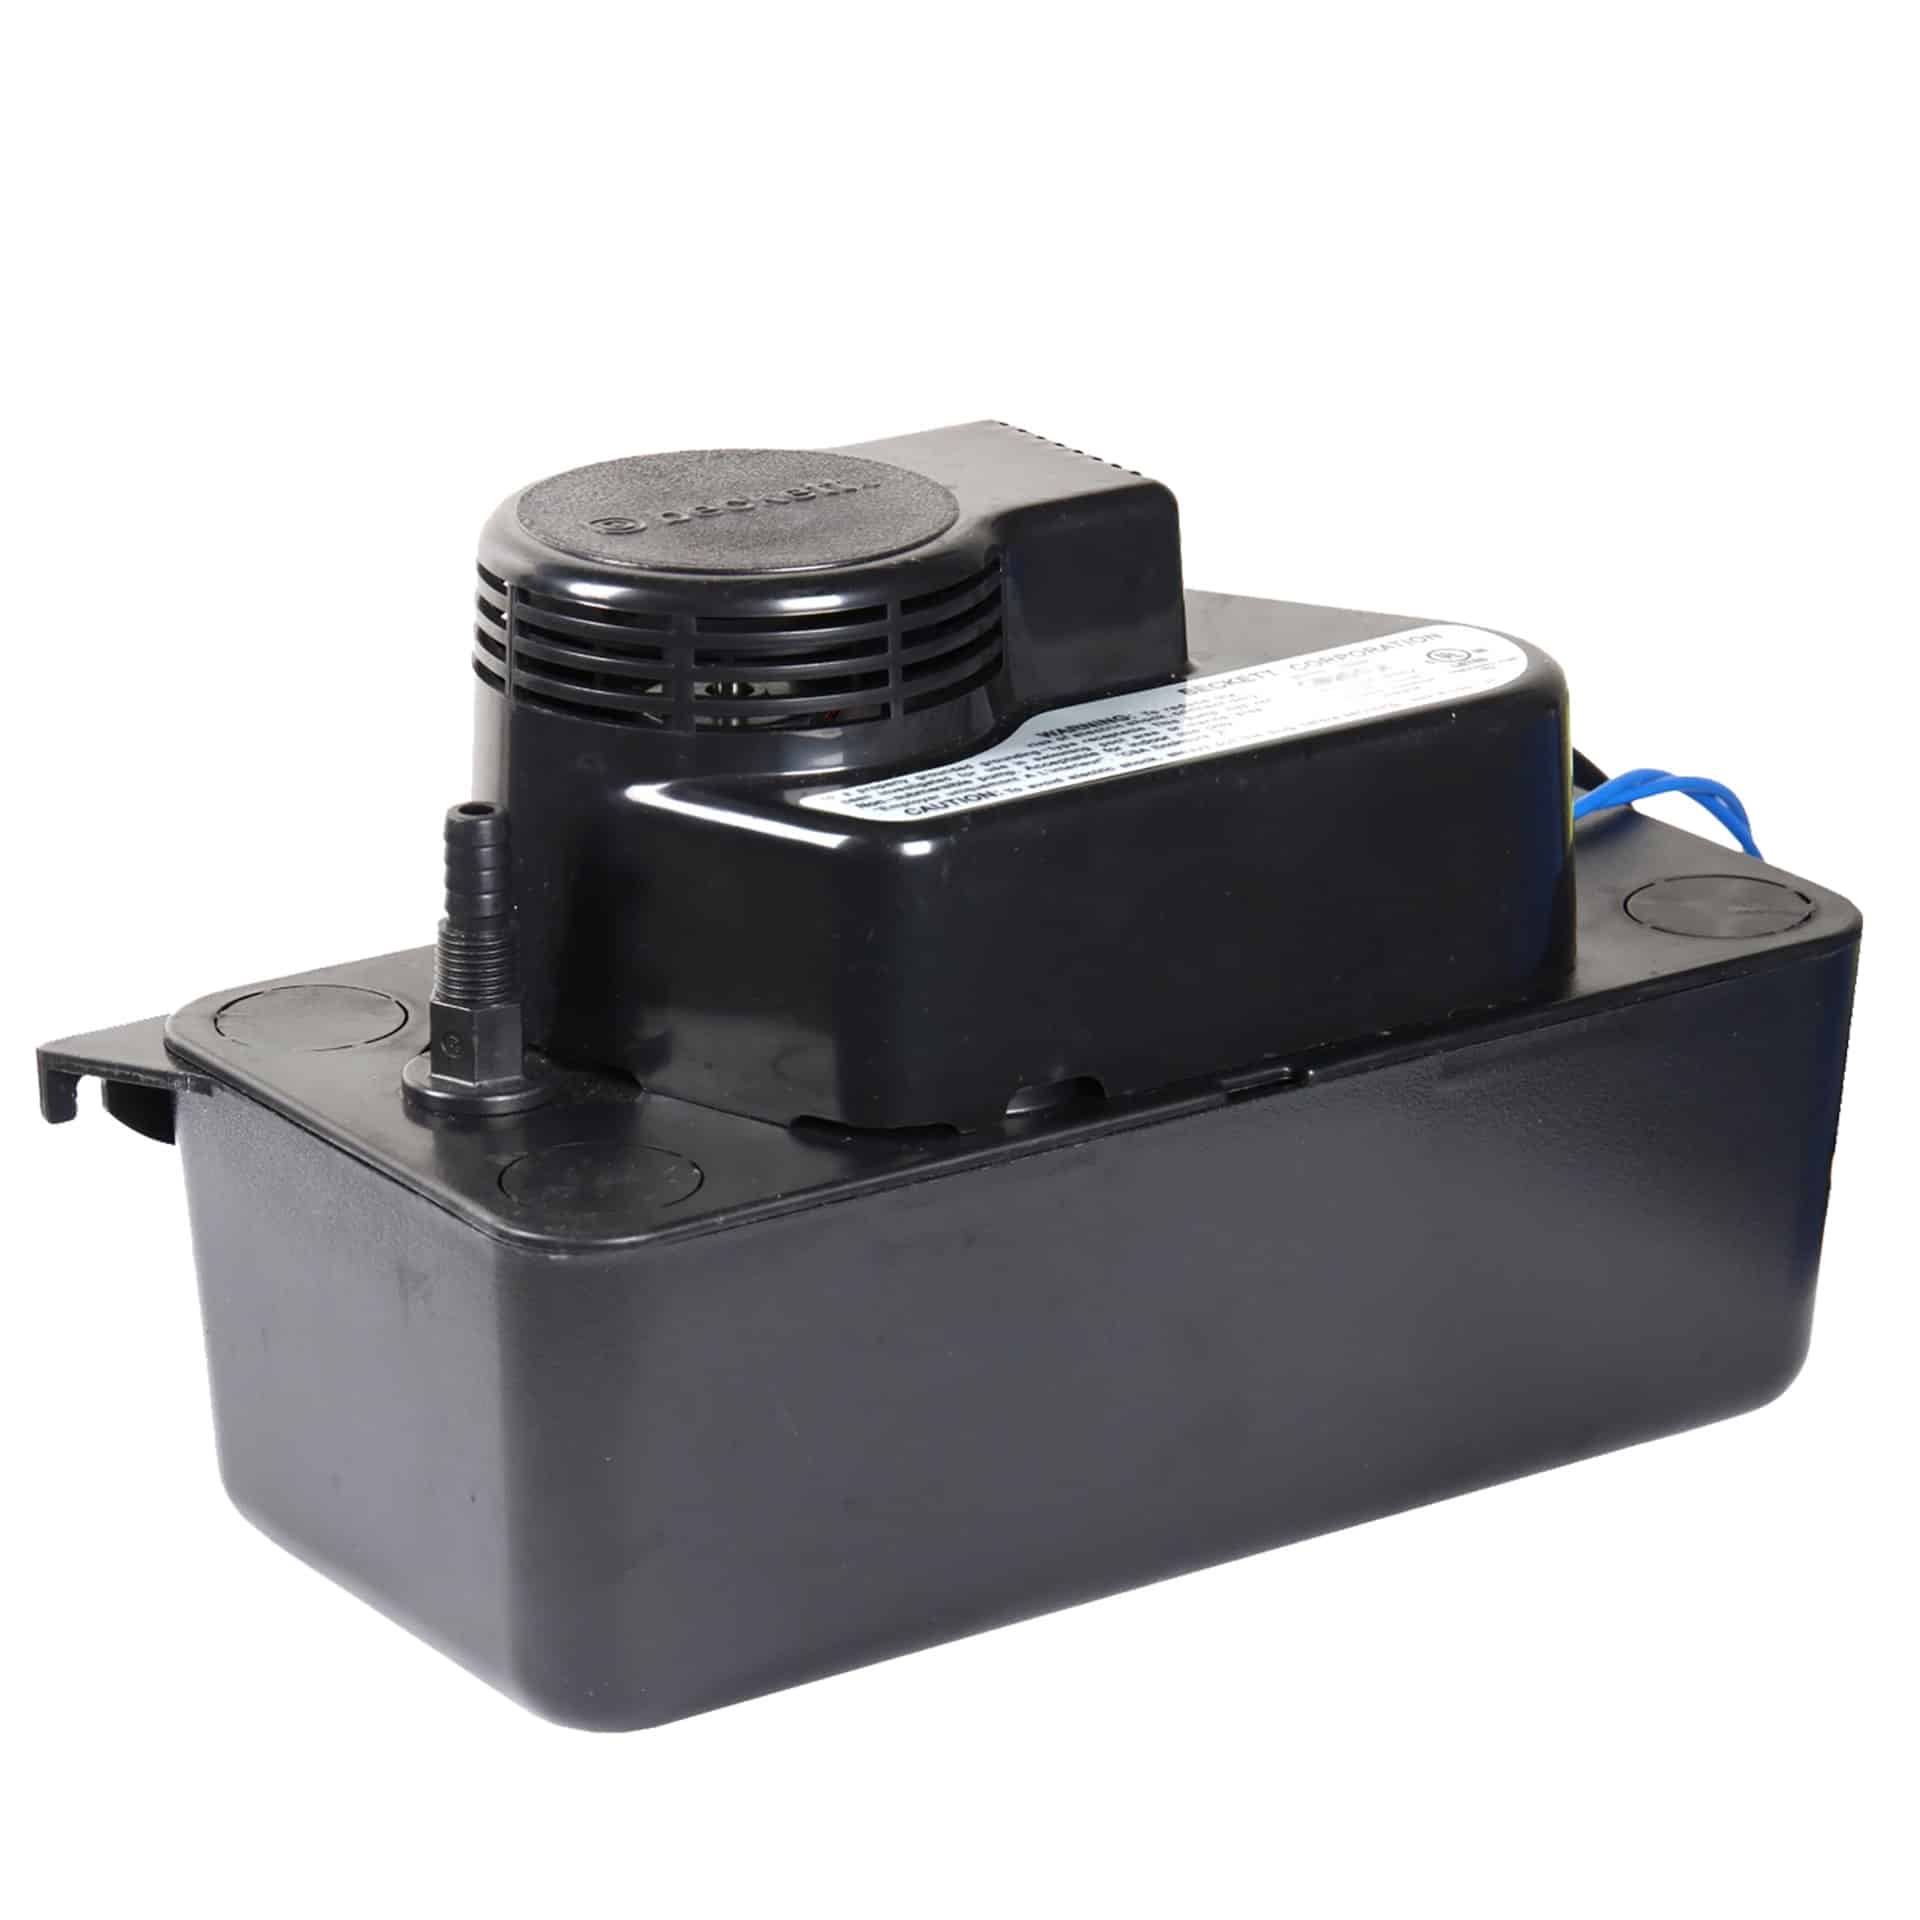 CB201UL – Medium Condensate Pump w/ Safety Switch, 115V, 20ft Max Lift